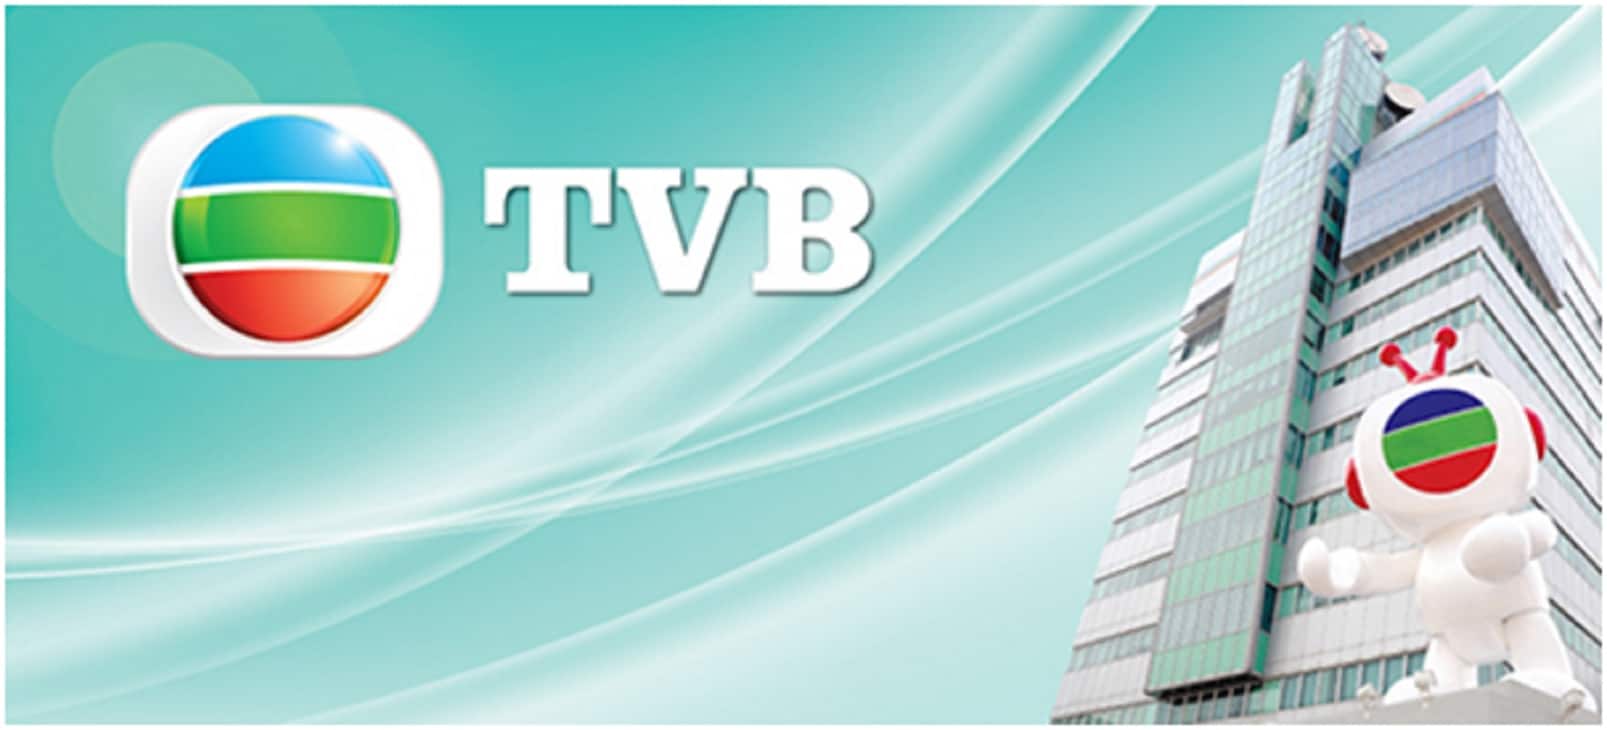 tvb travel show host